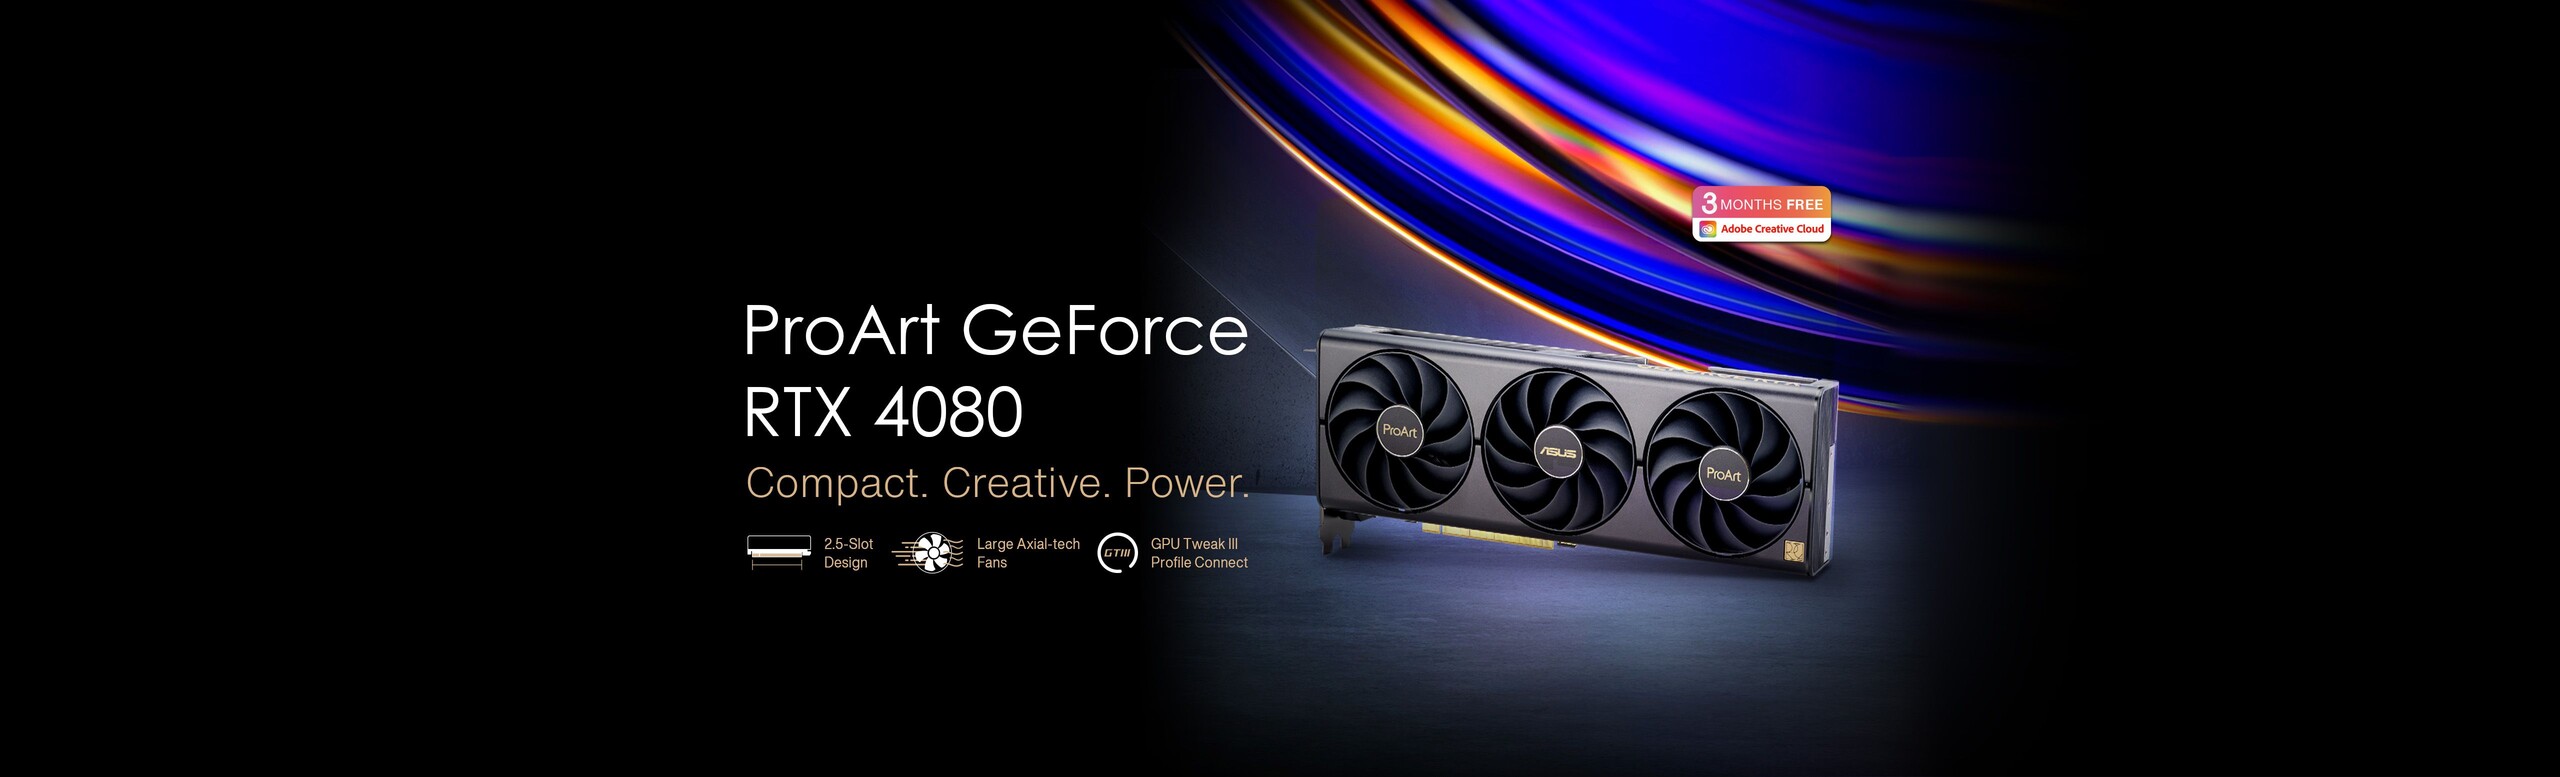 Image of ProArt GeForce RTX 4080 Compact.  Creative.  Power.  2.5 Slot Design Large Axial-tech Fans GPU Tweak III Profile Connect